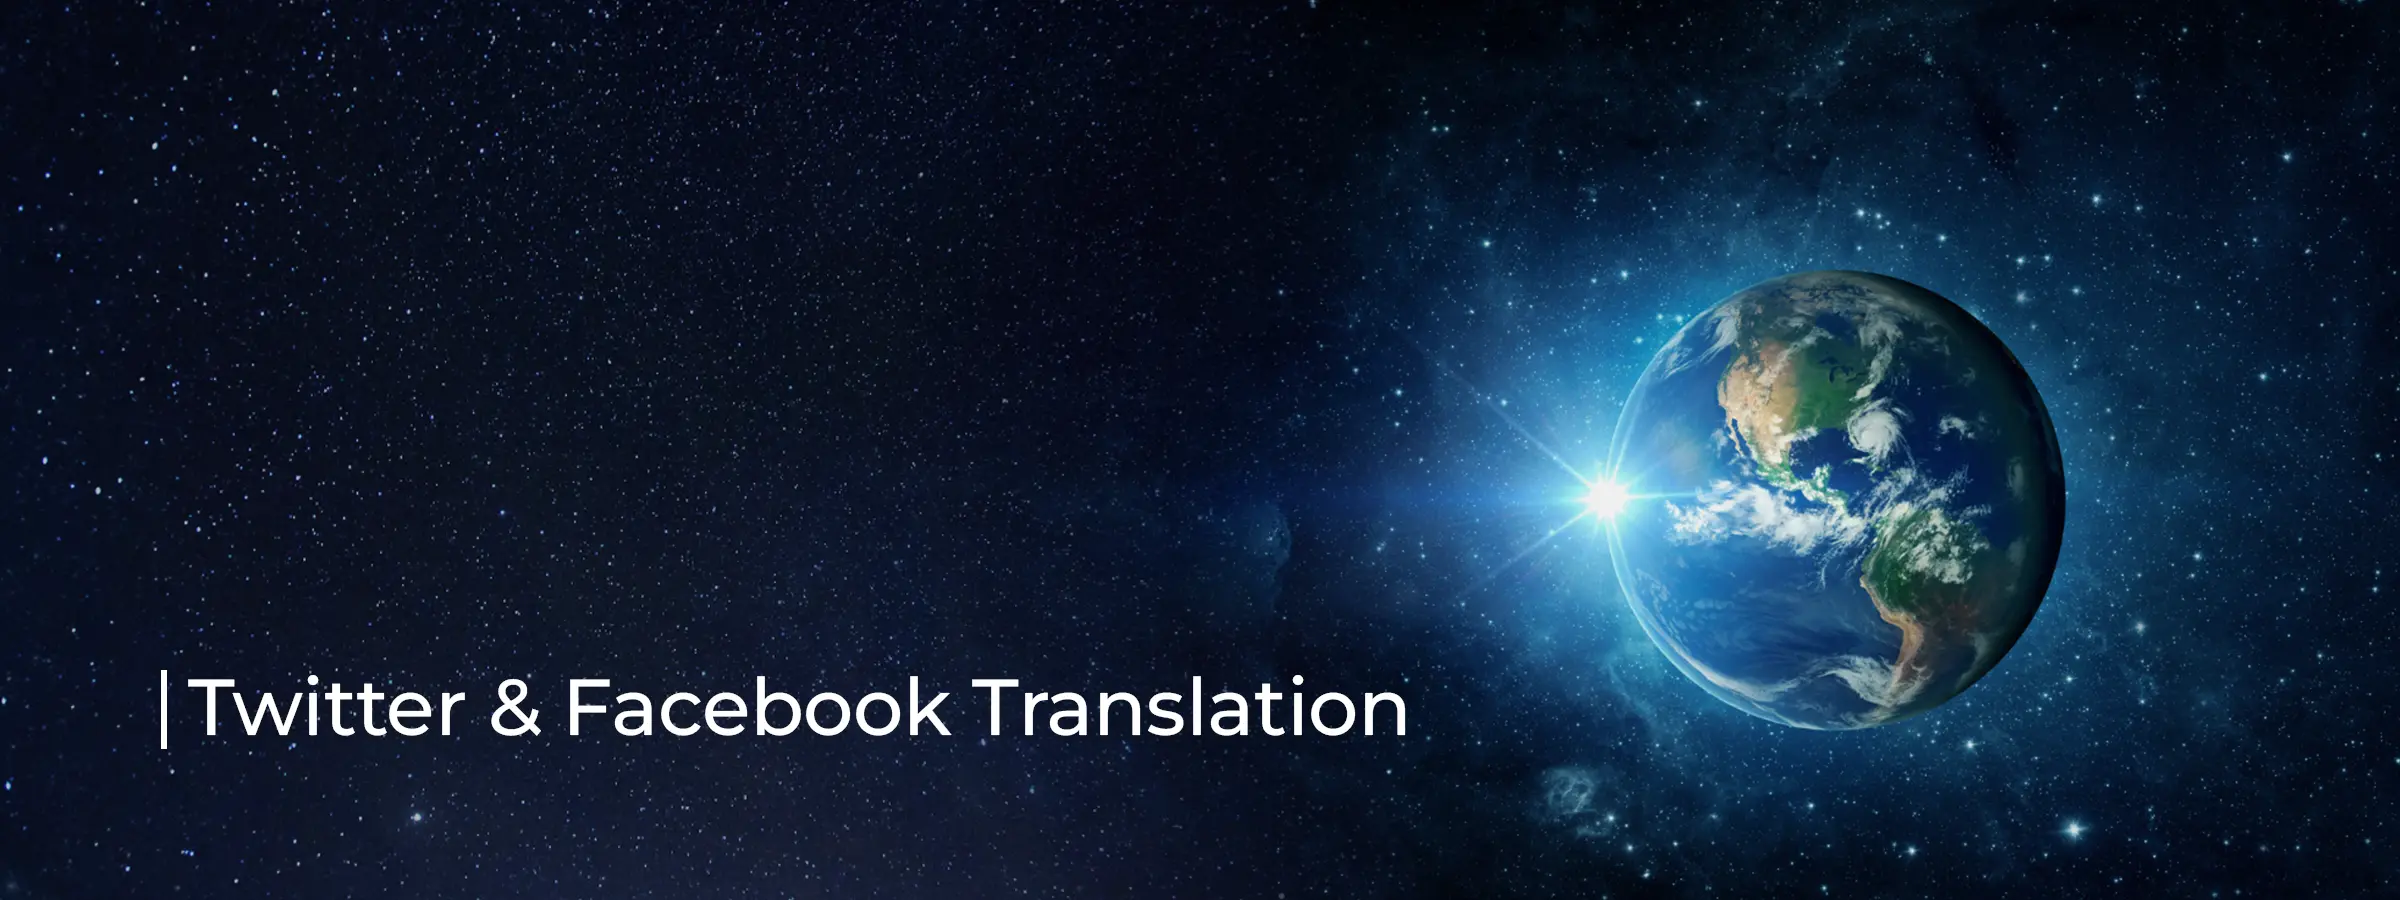 twitter-and-facebook-translation-banner